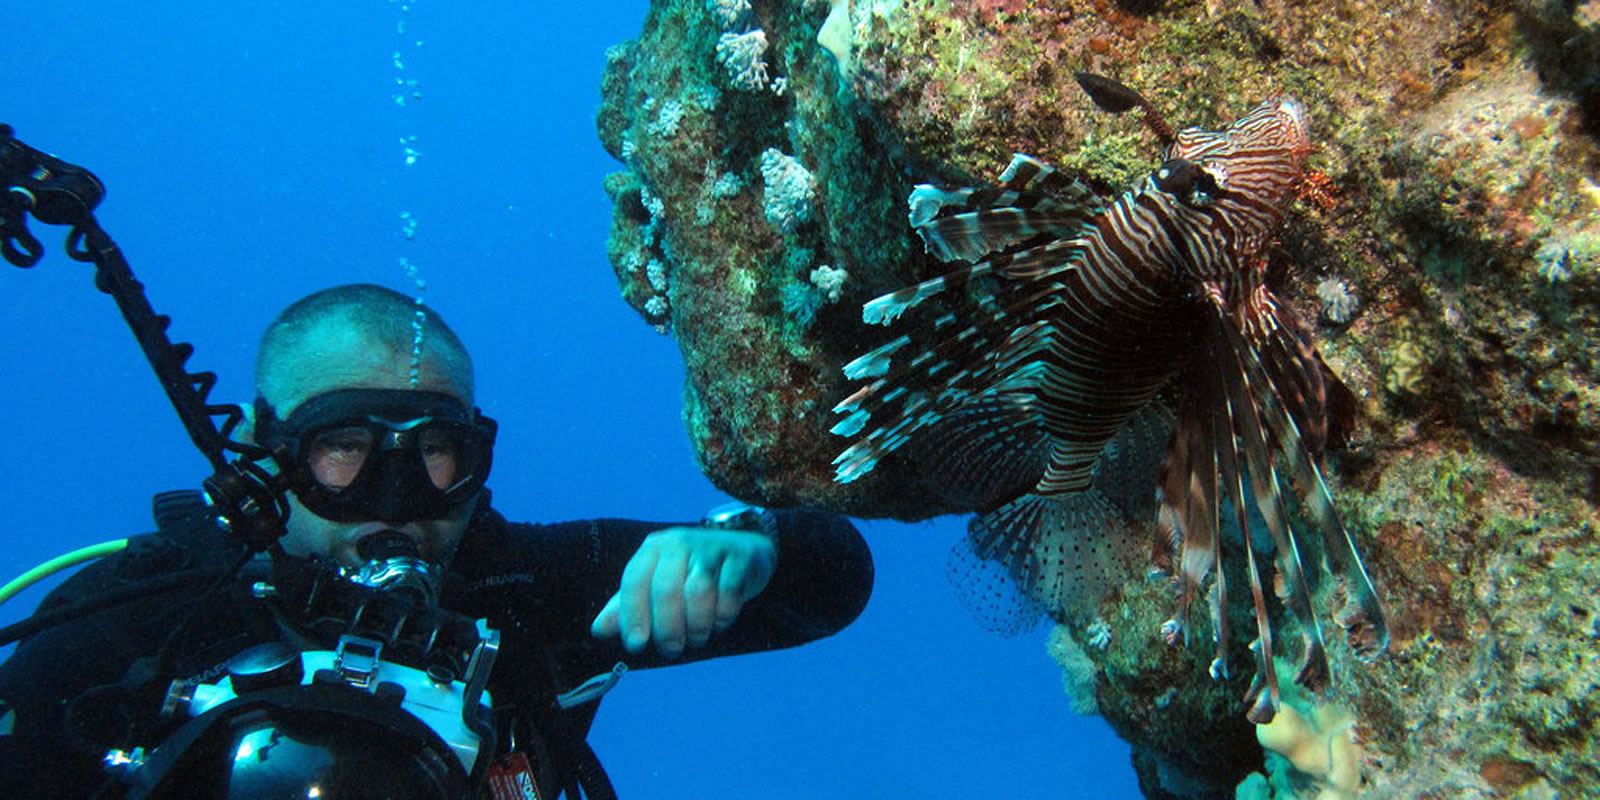 A scuba diver observes a lionfish on a coral reef.